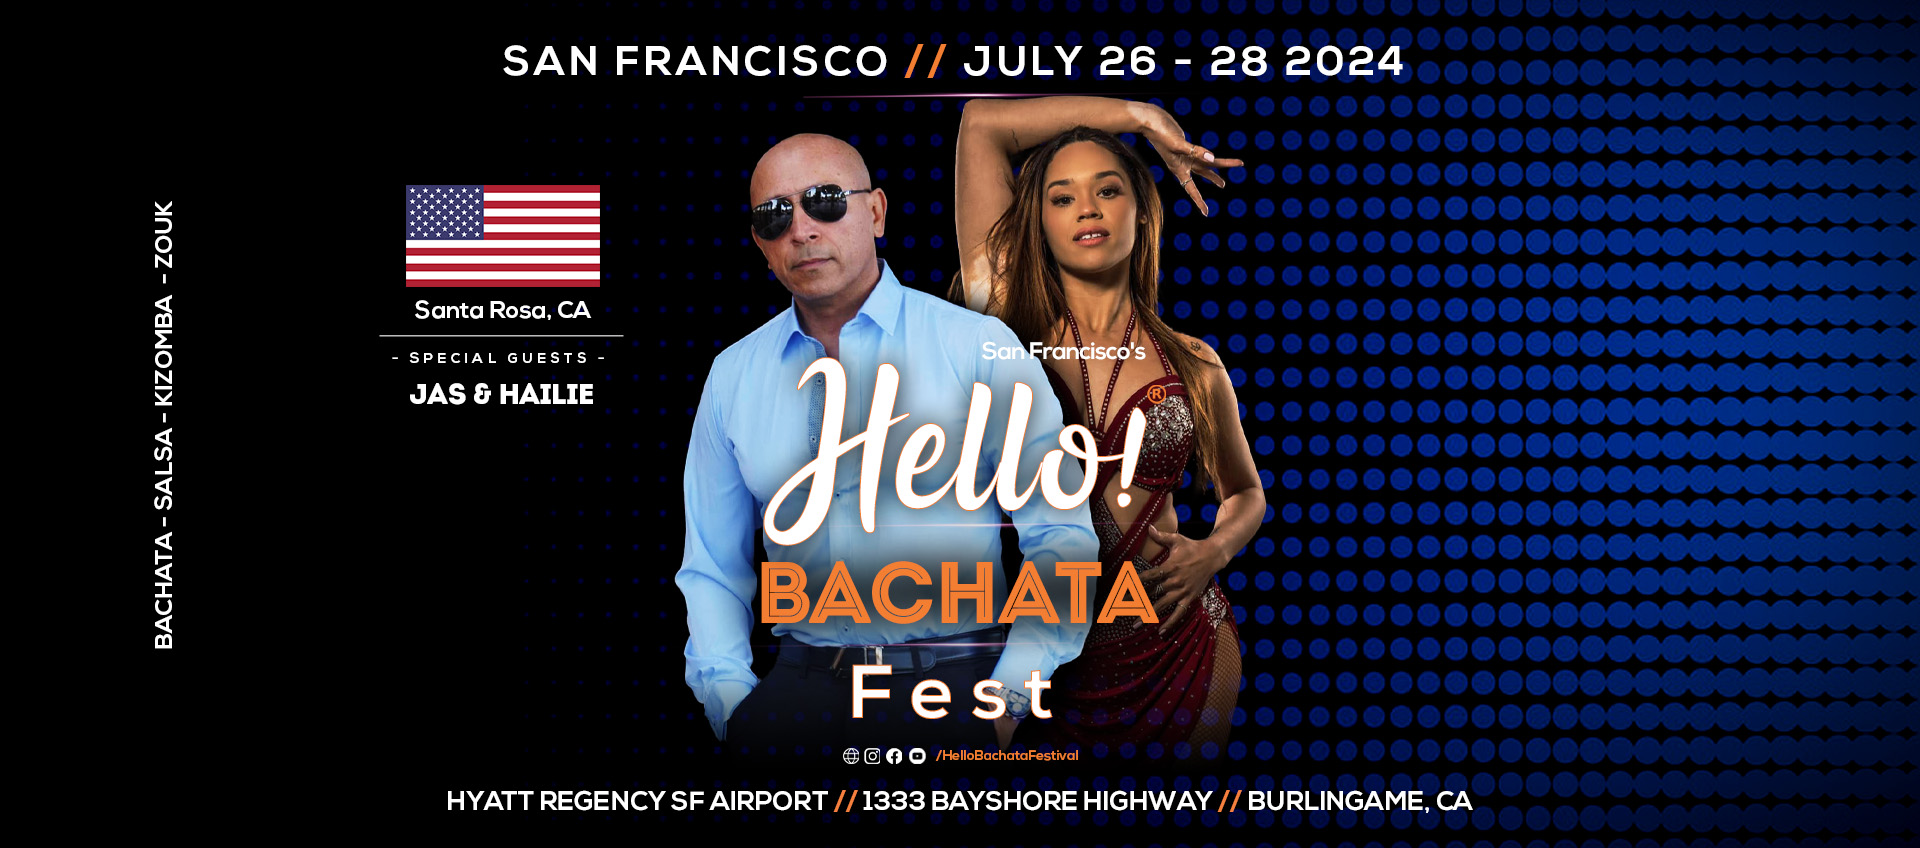 Hello! Bachata Fest - Jose Santamaria JAS and Hailie Patton - Santa Rosa